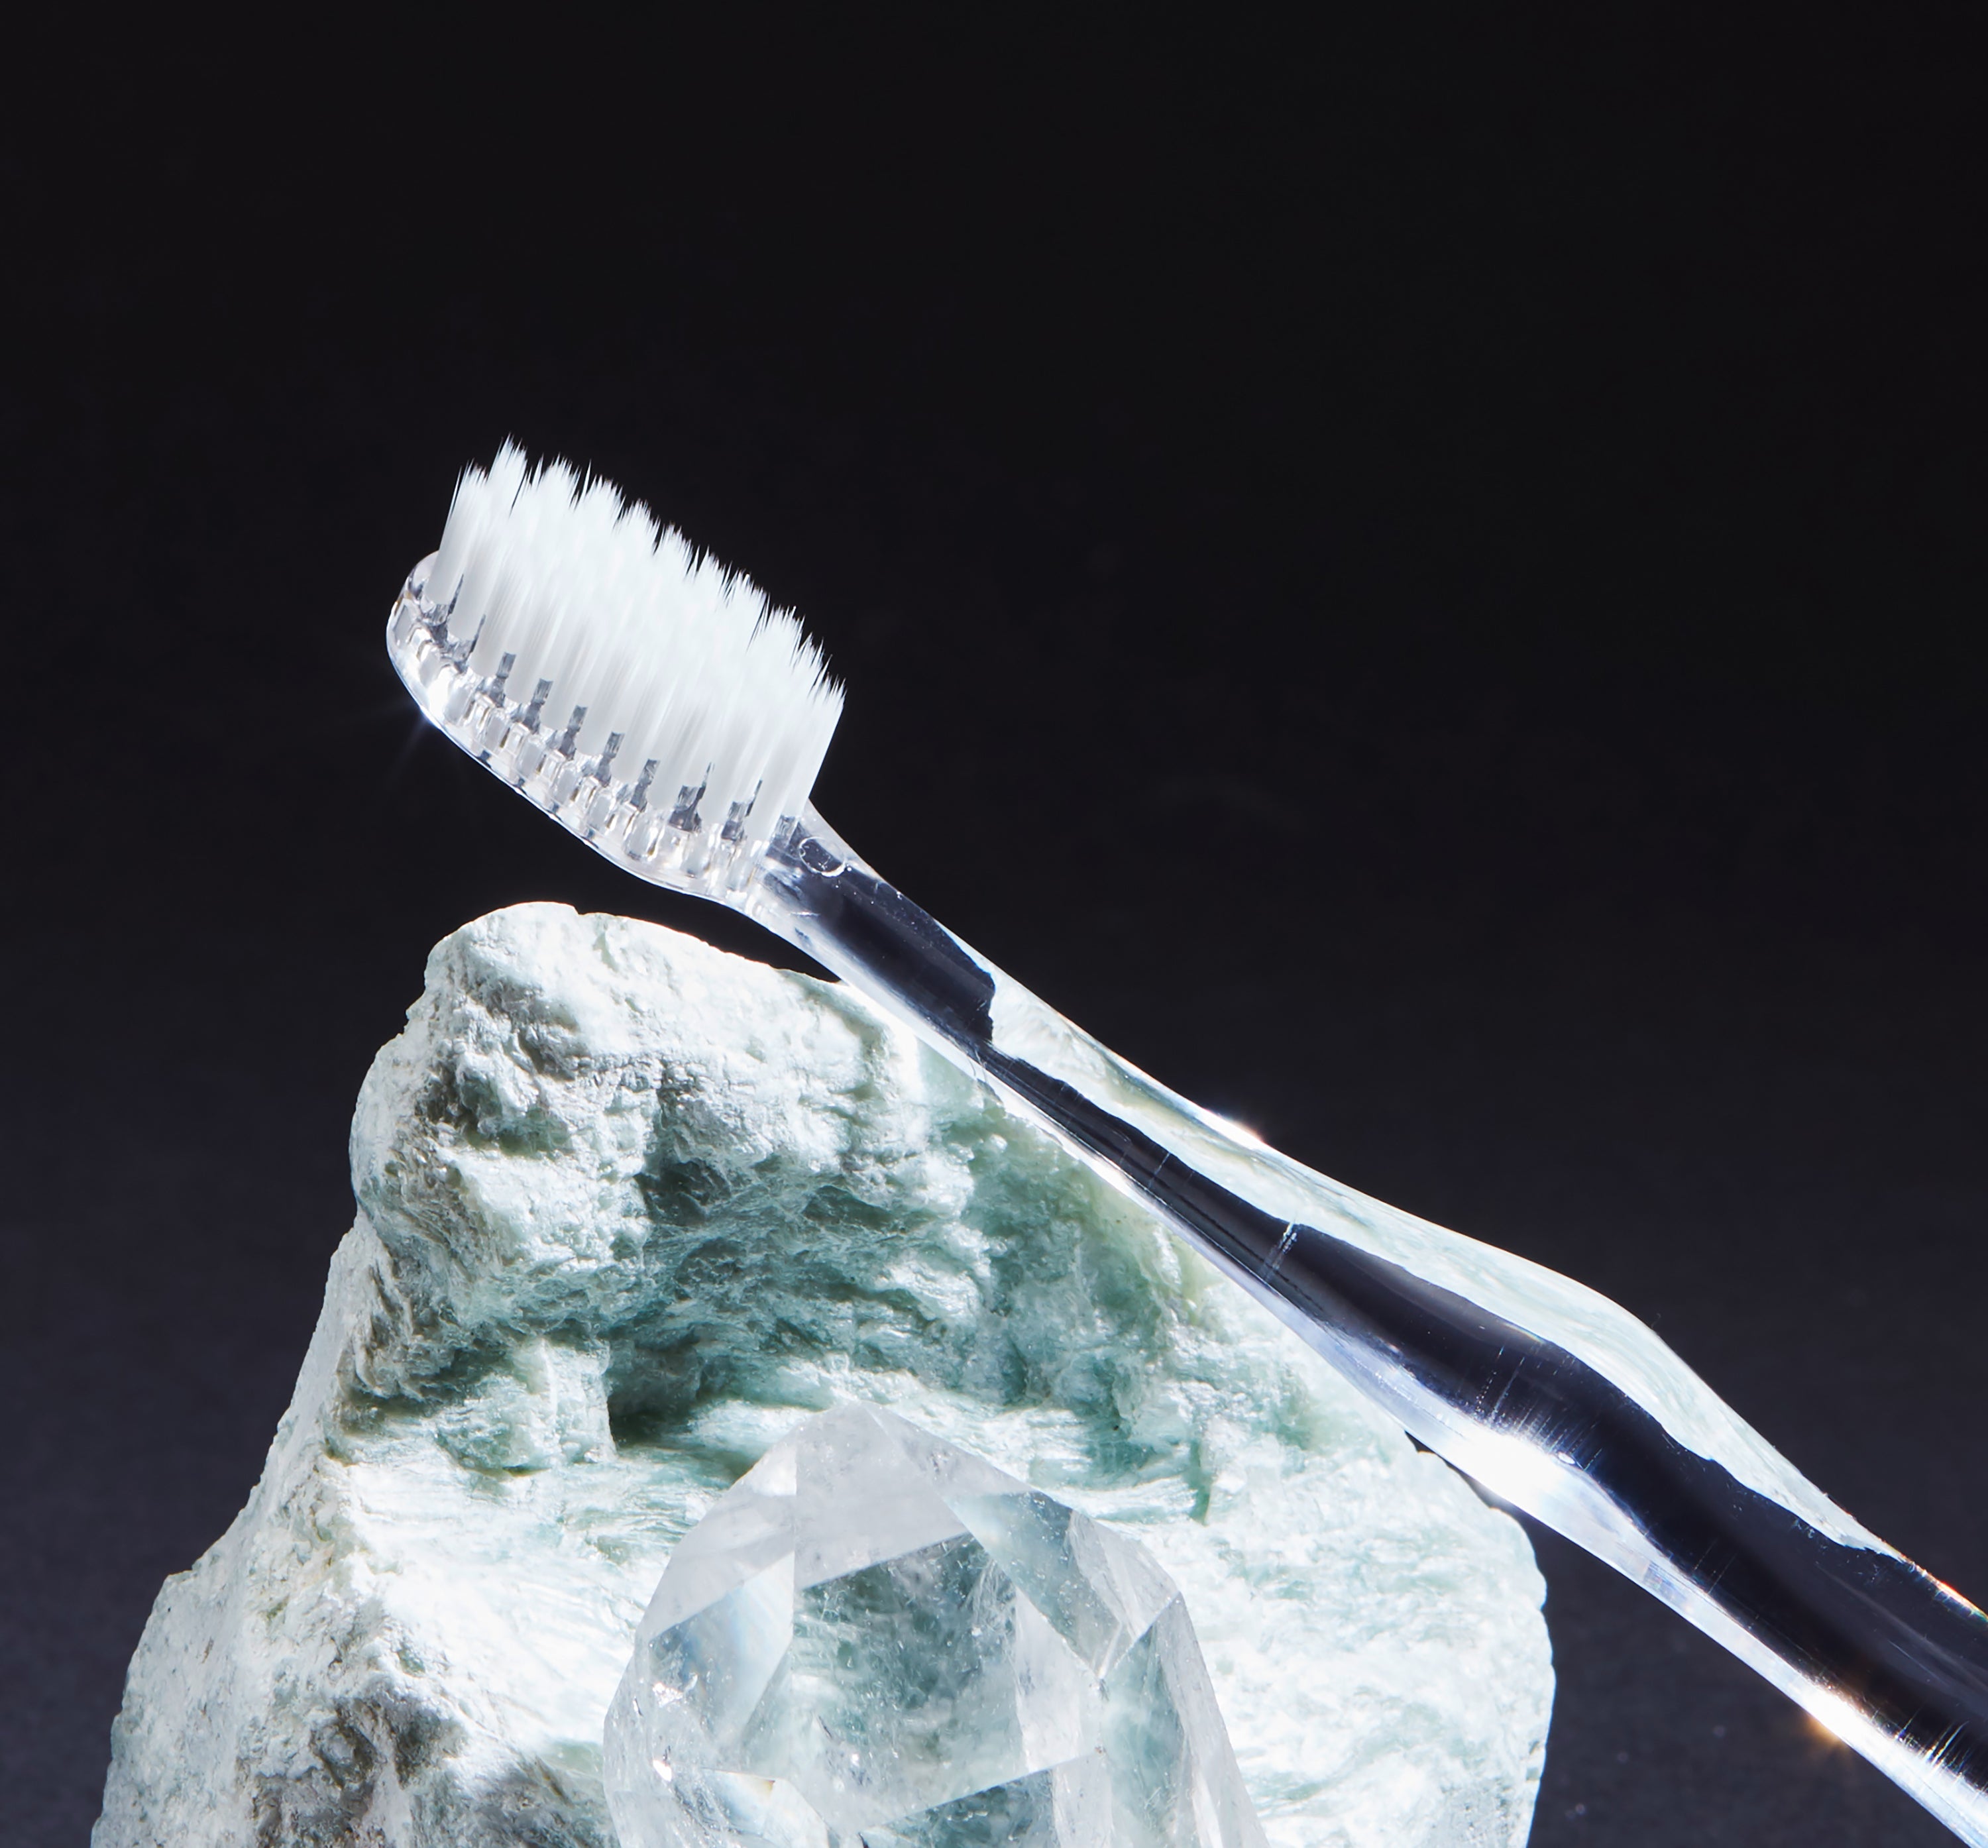 Ultra Soft Travel Toothbrush - white